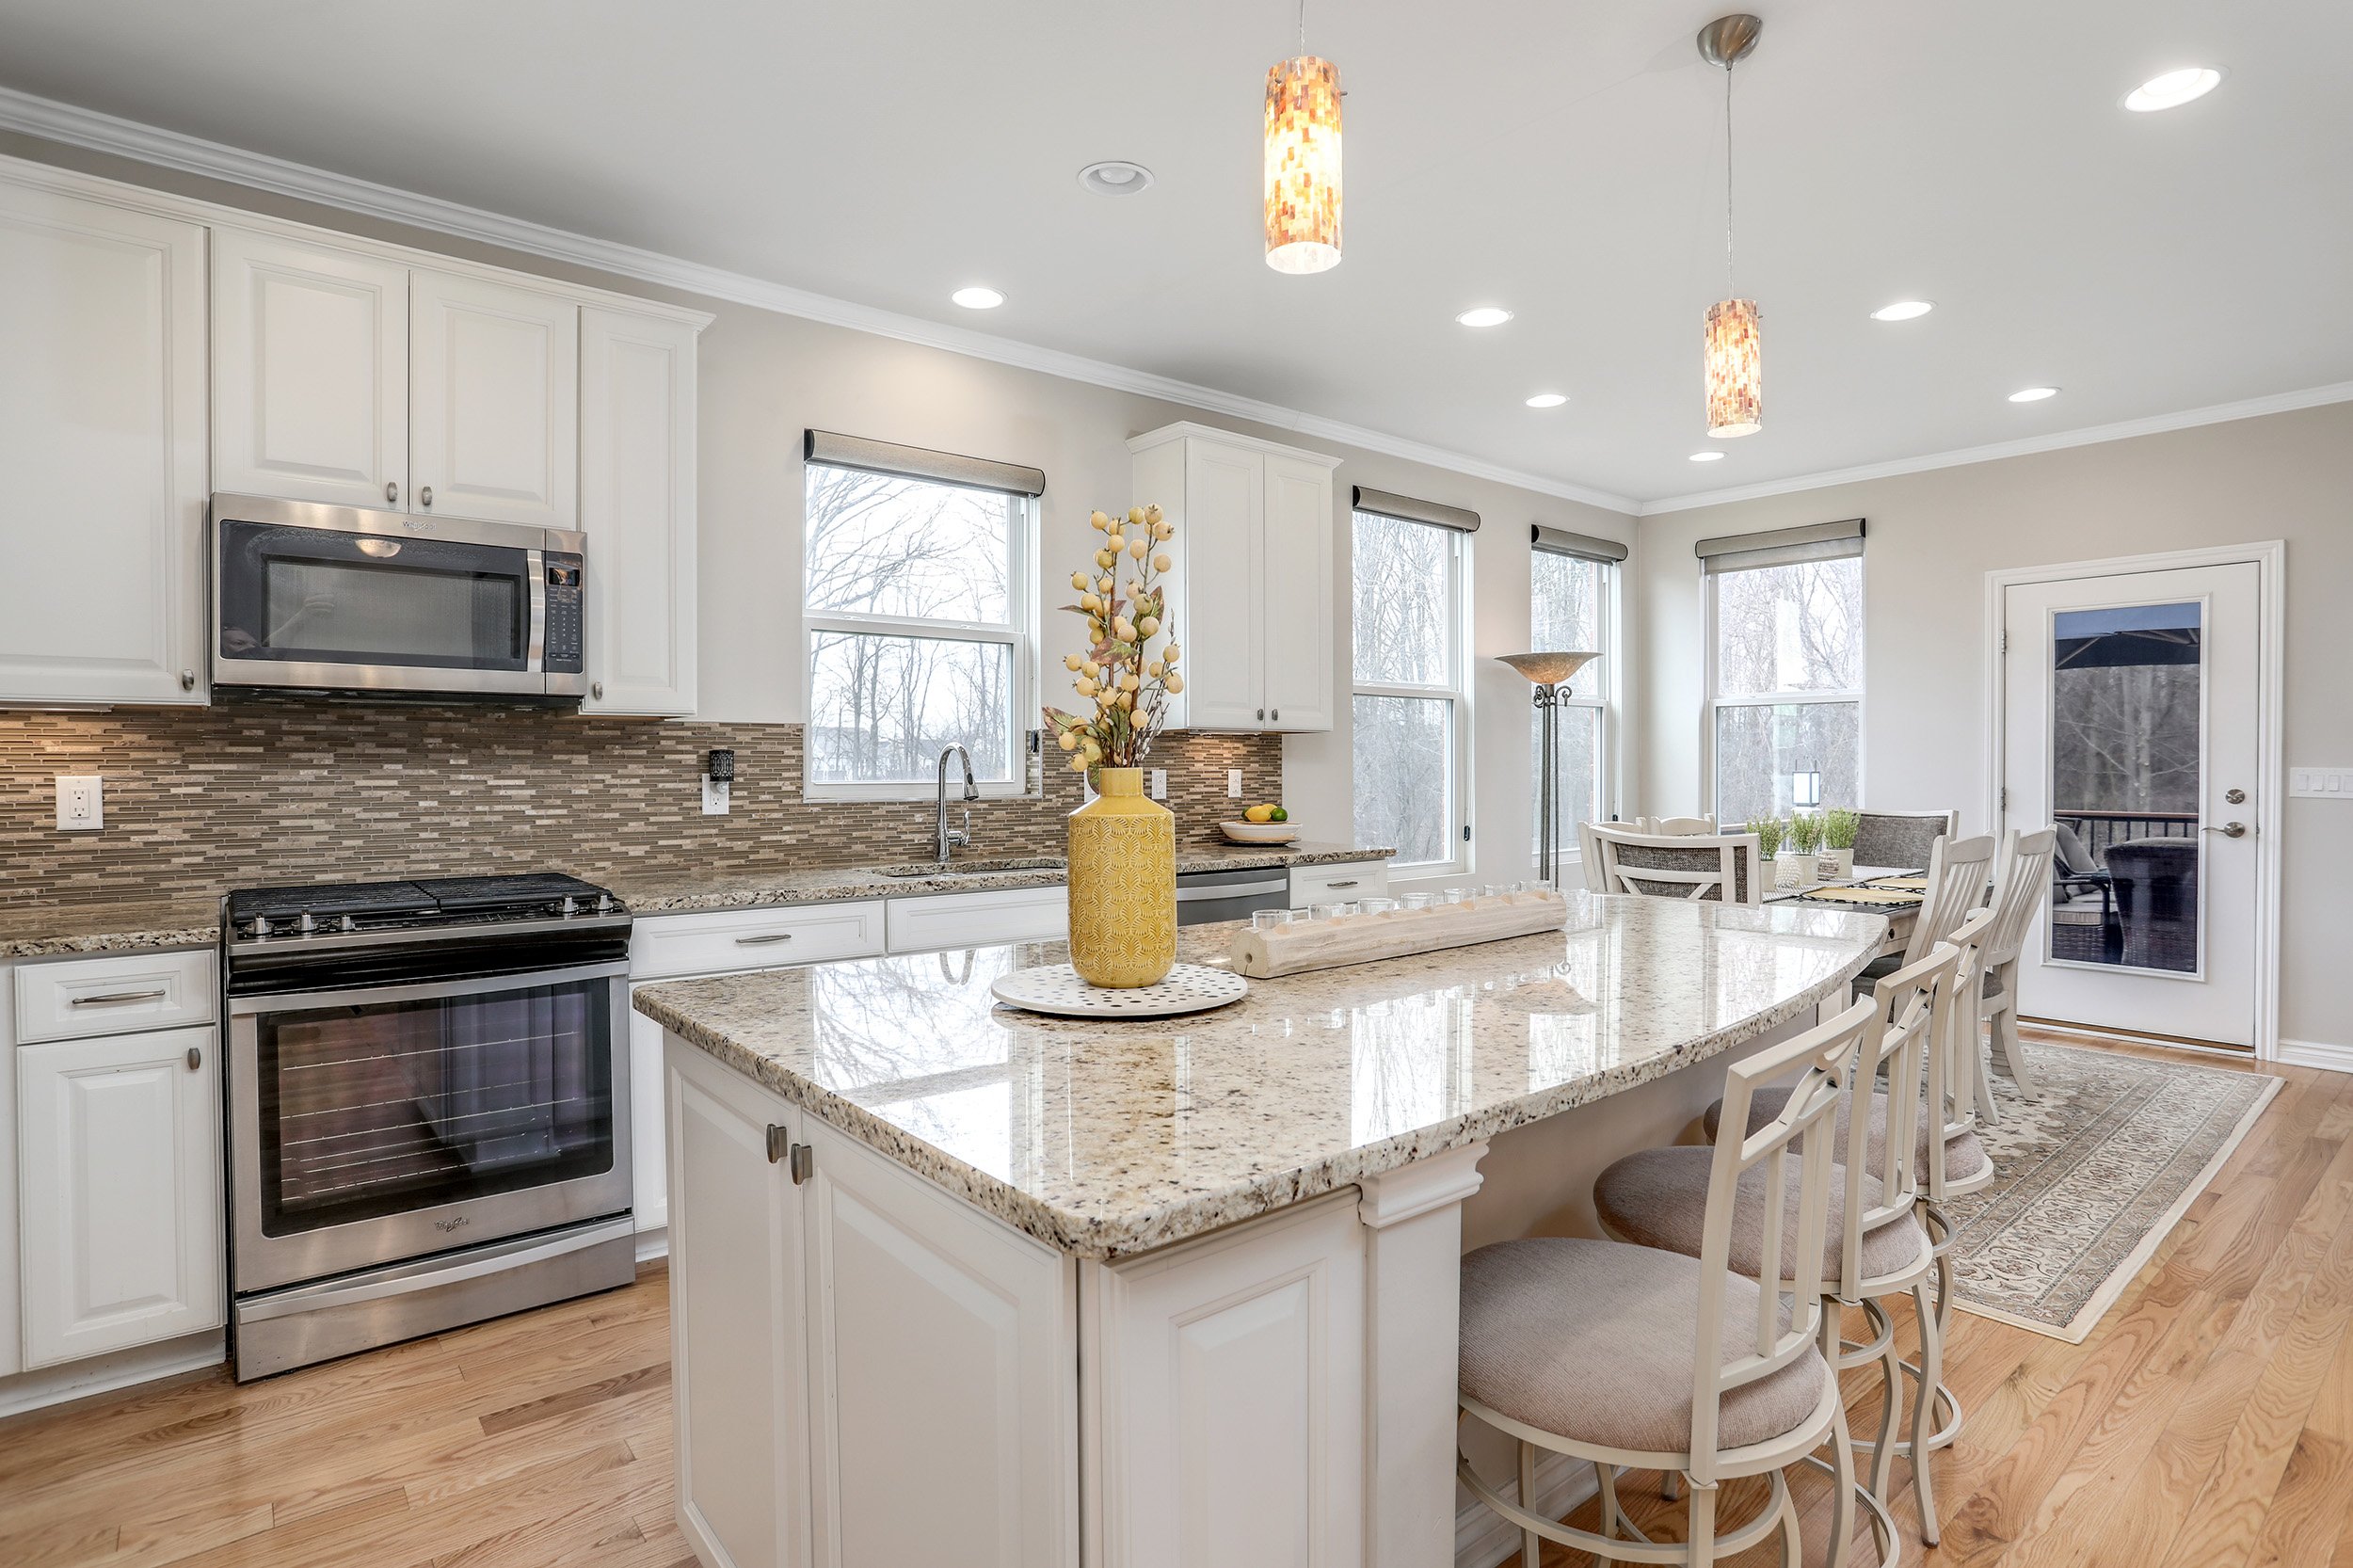  Canton Real Estate Photography - white contemporary kitchen  